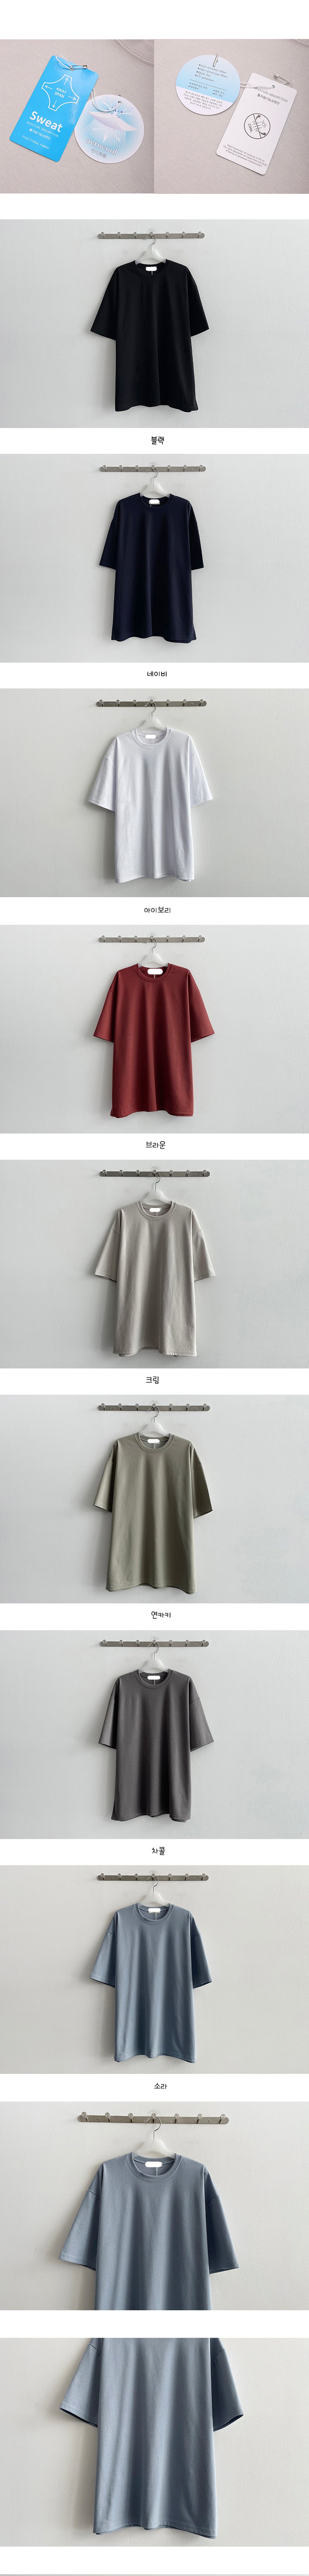 [A breathable fabric!] Tシャツウィズクールラディッシュオーバーフィット